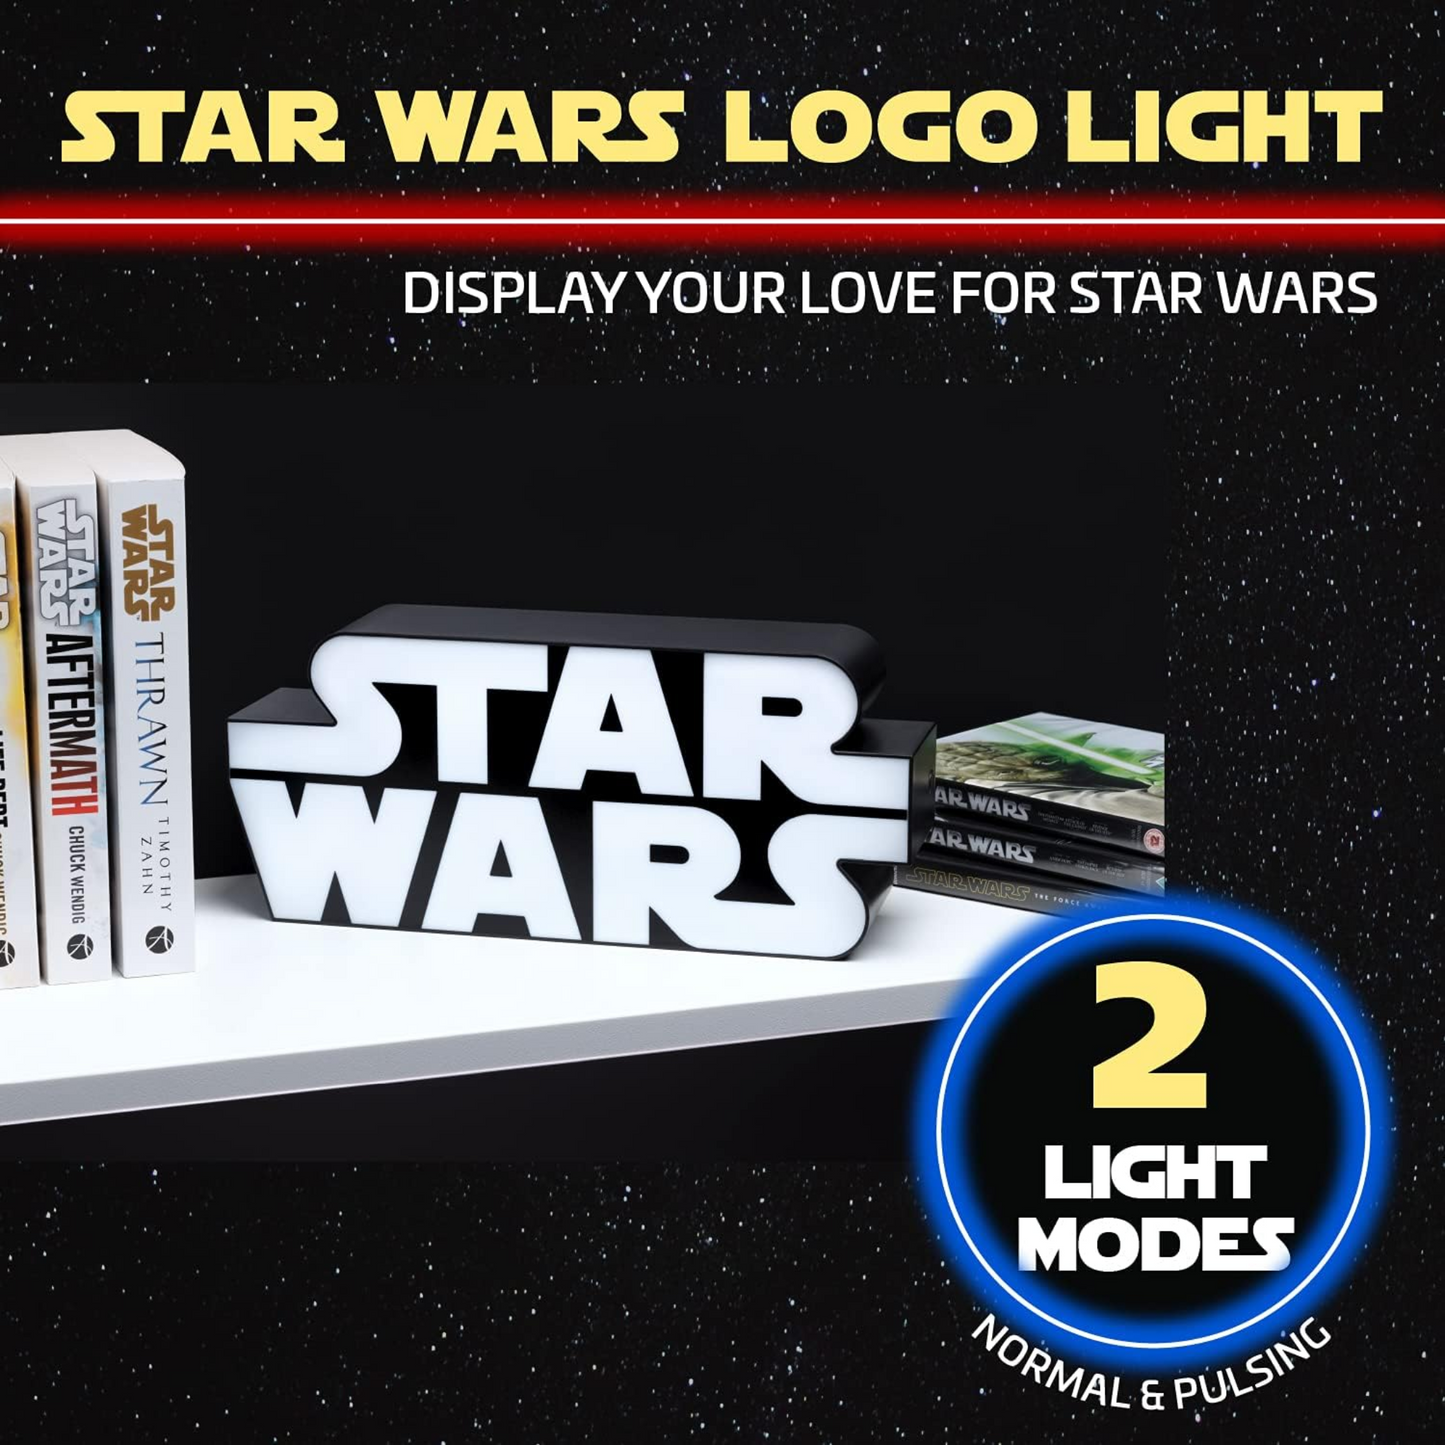 Star wars logo light - Paladone